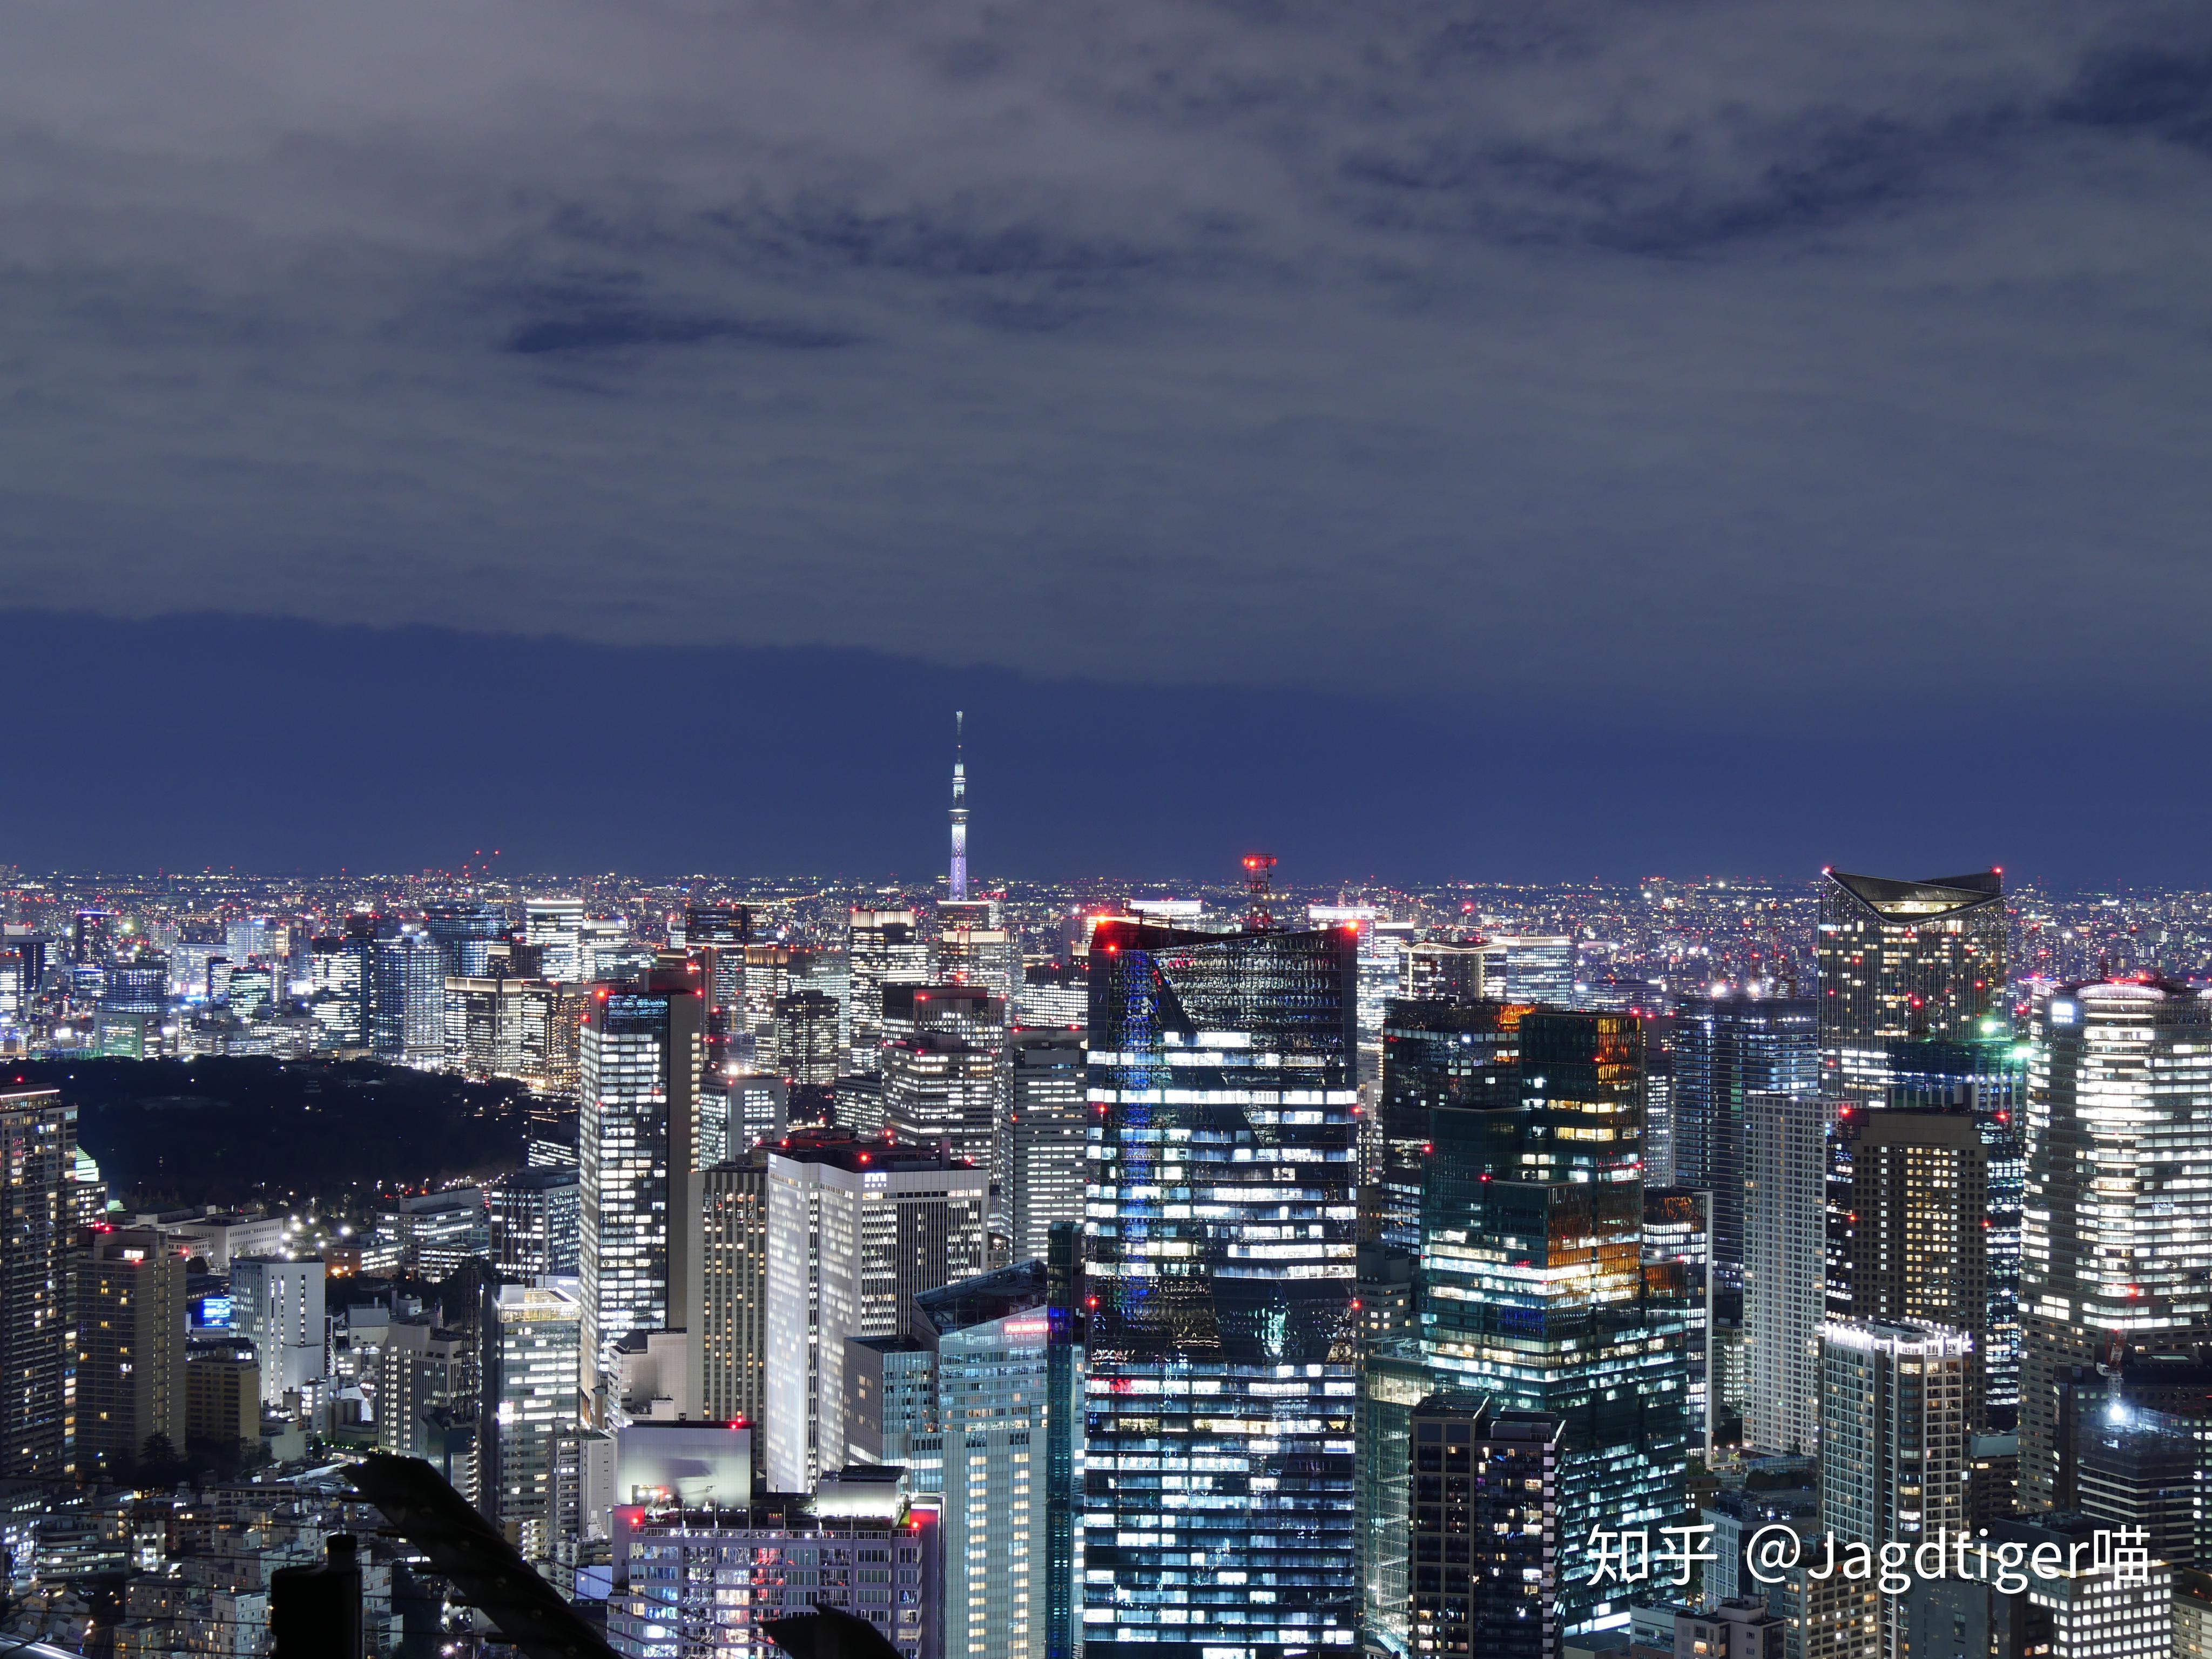 【1920x1080】东京塔在夜间壁纸 - 彼岸桌面